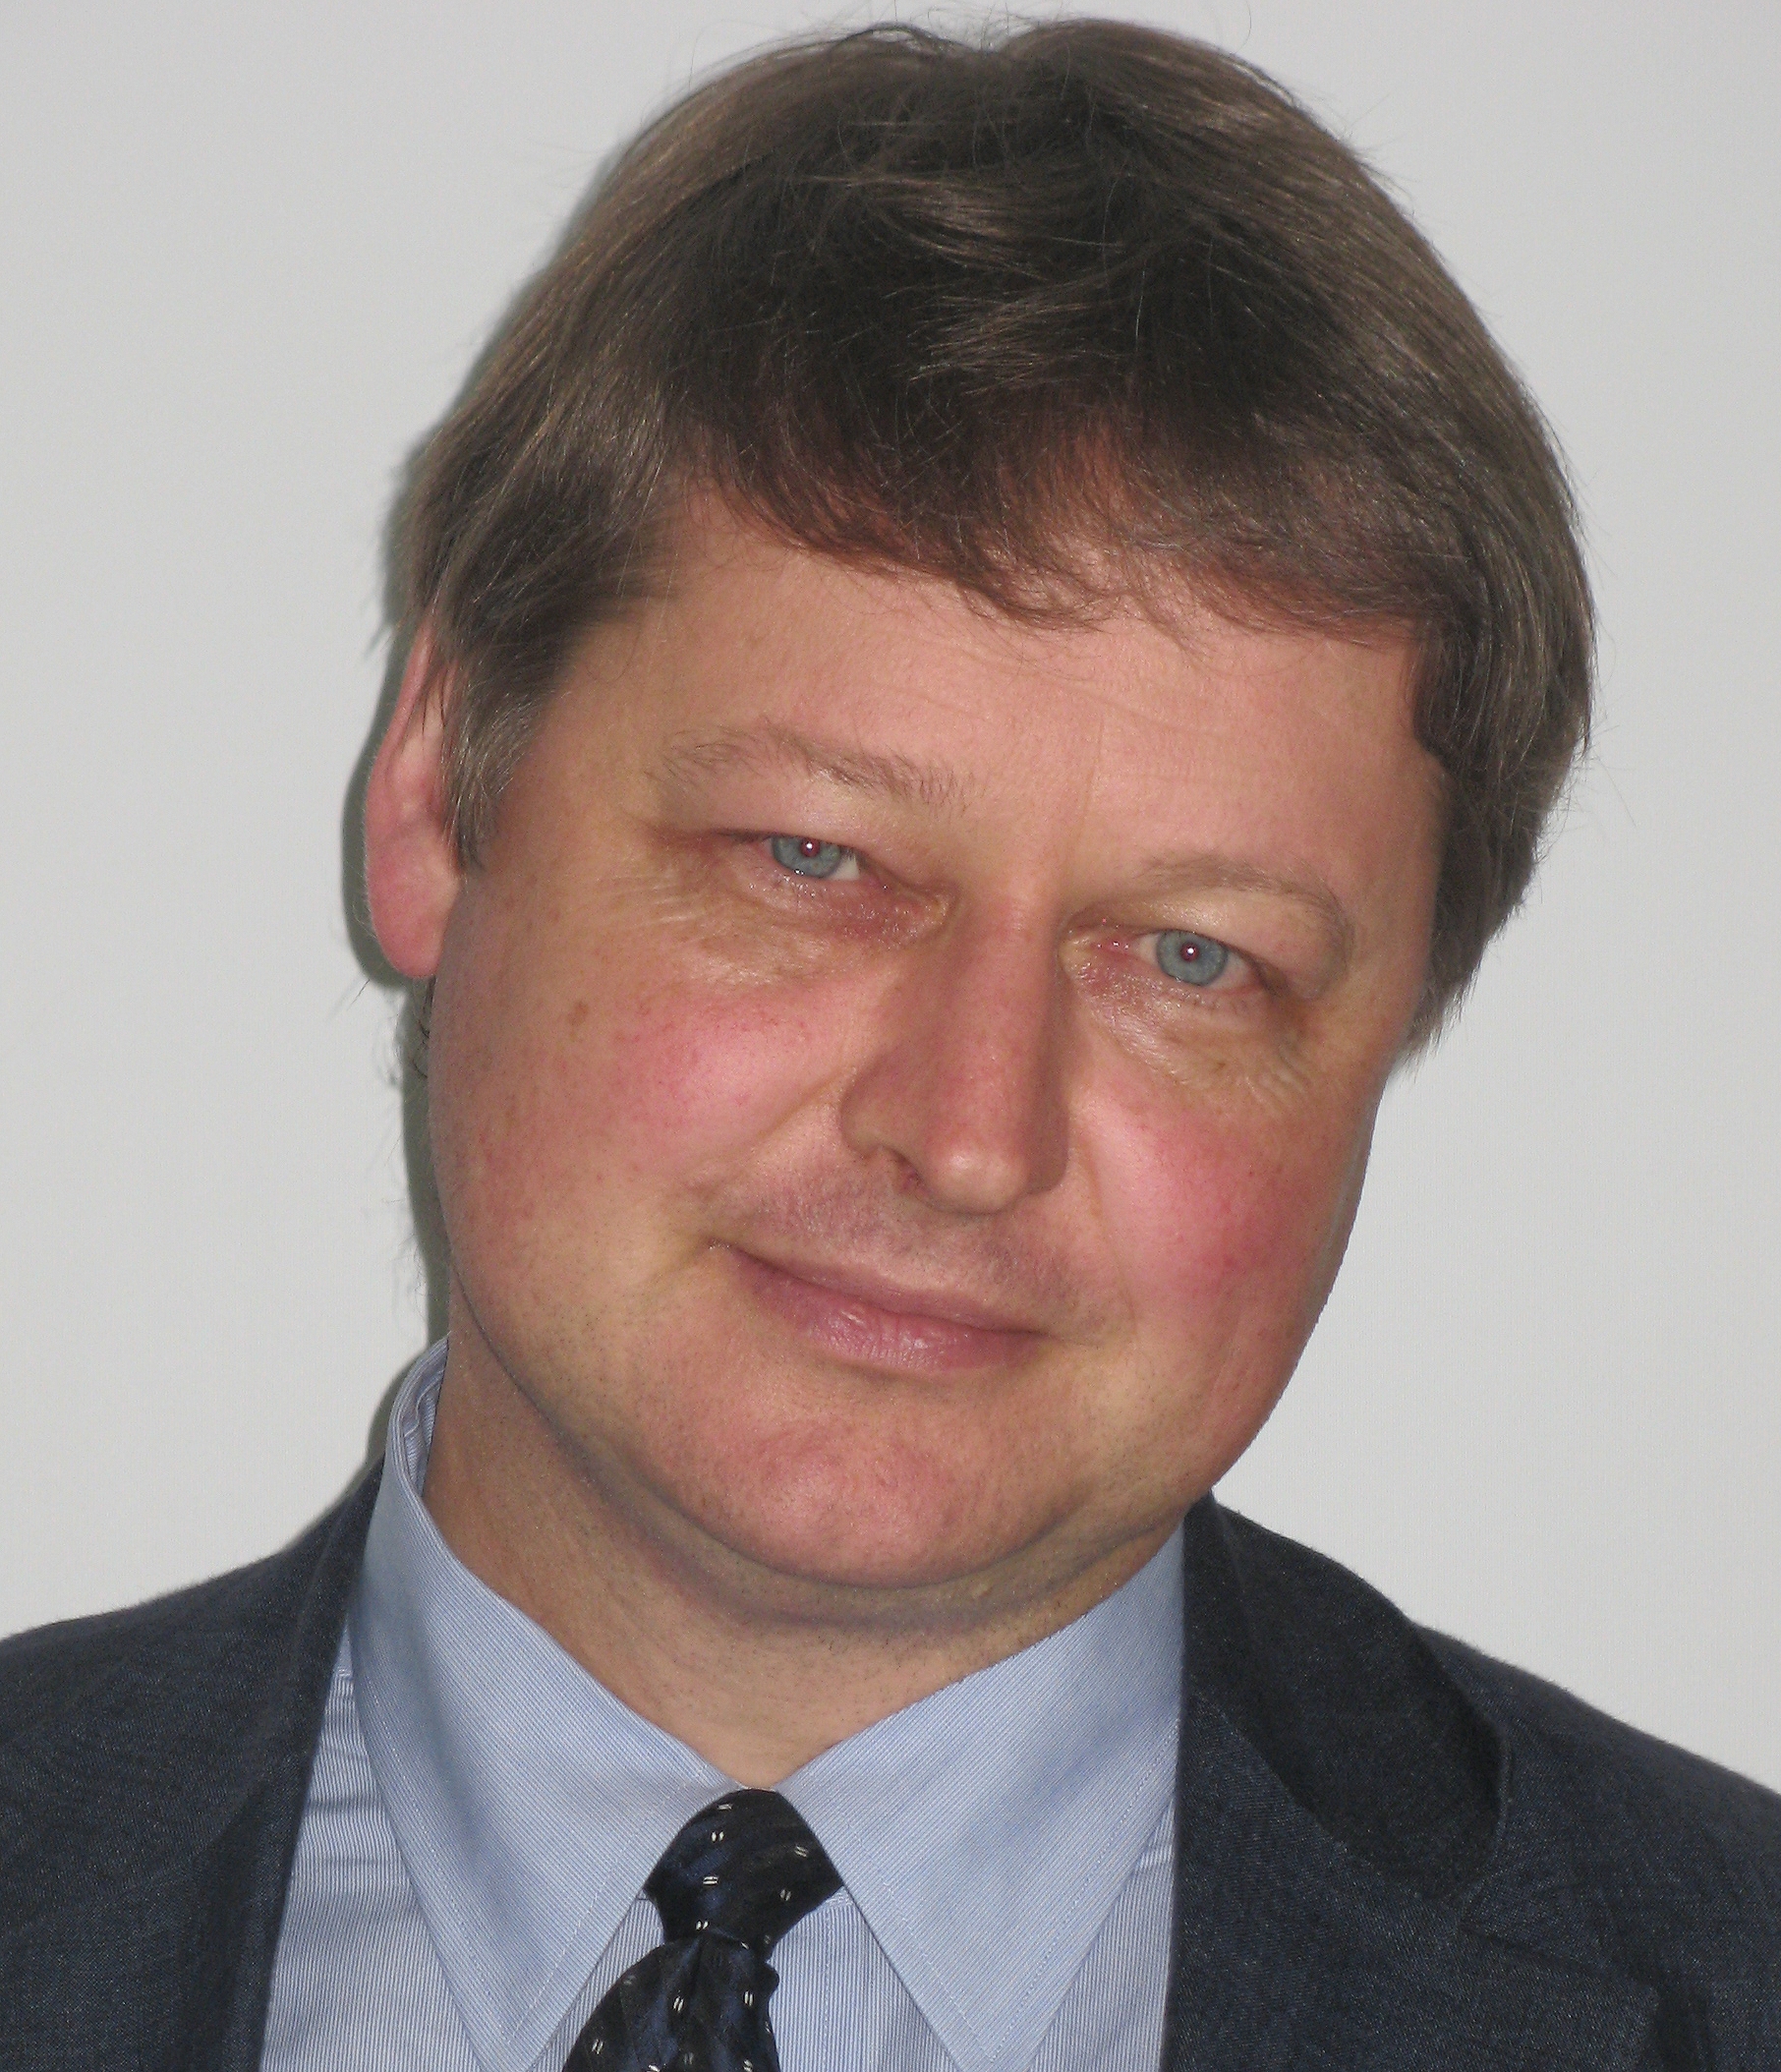 Huntington researcher Prof. Dr. G. Bernhard Landwehrmeyer (Photo: University of Ulm)